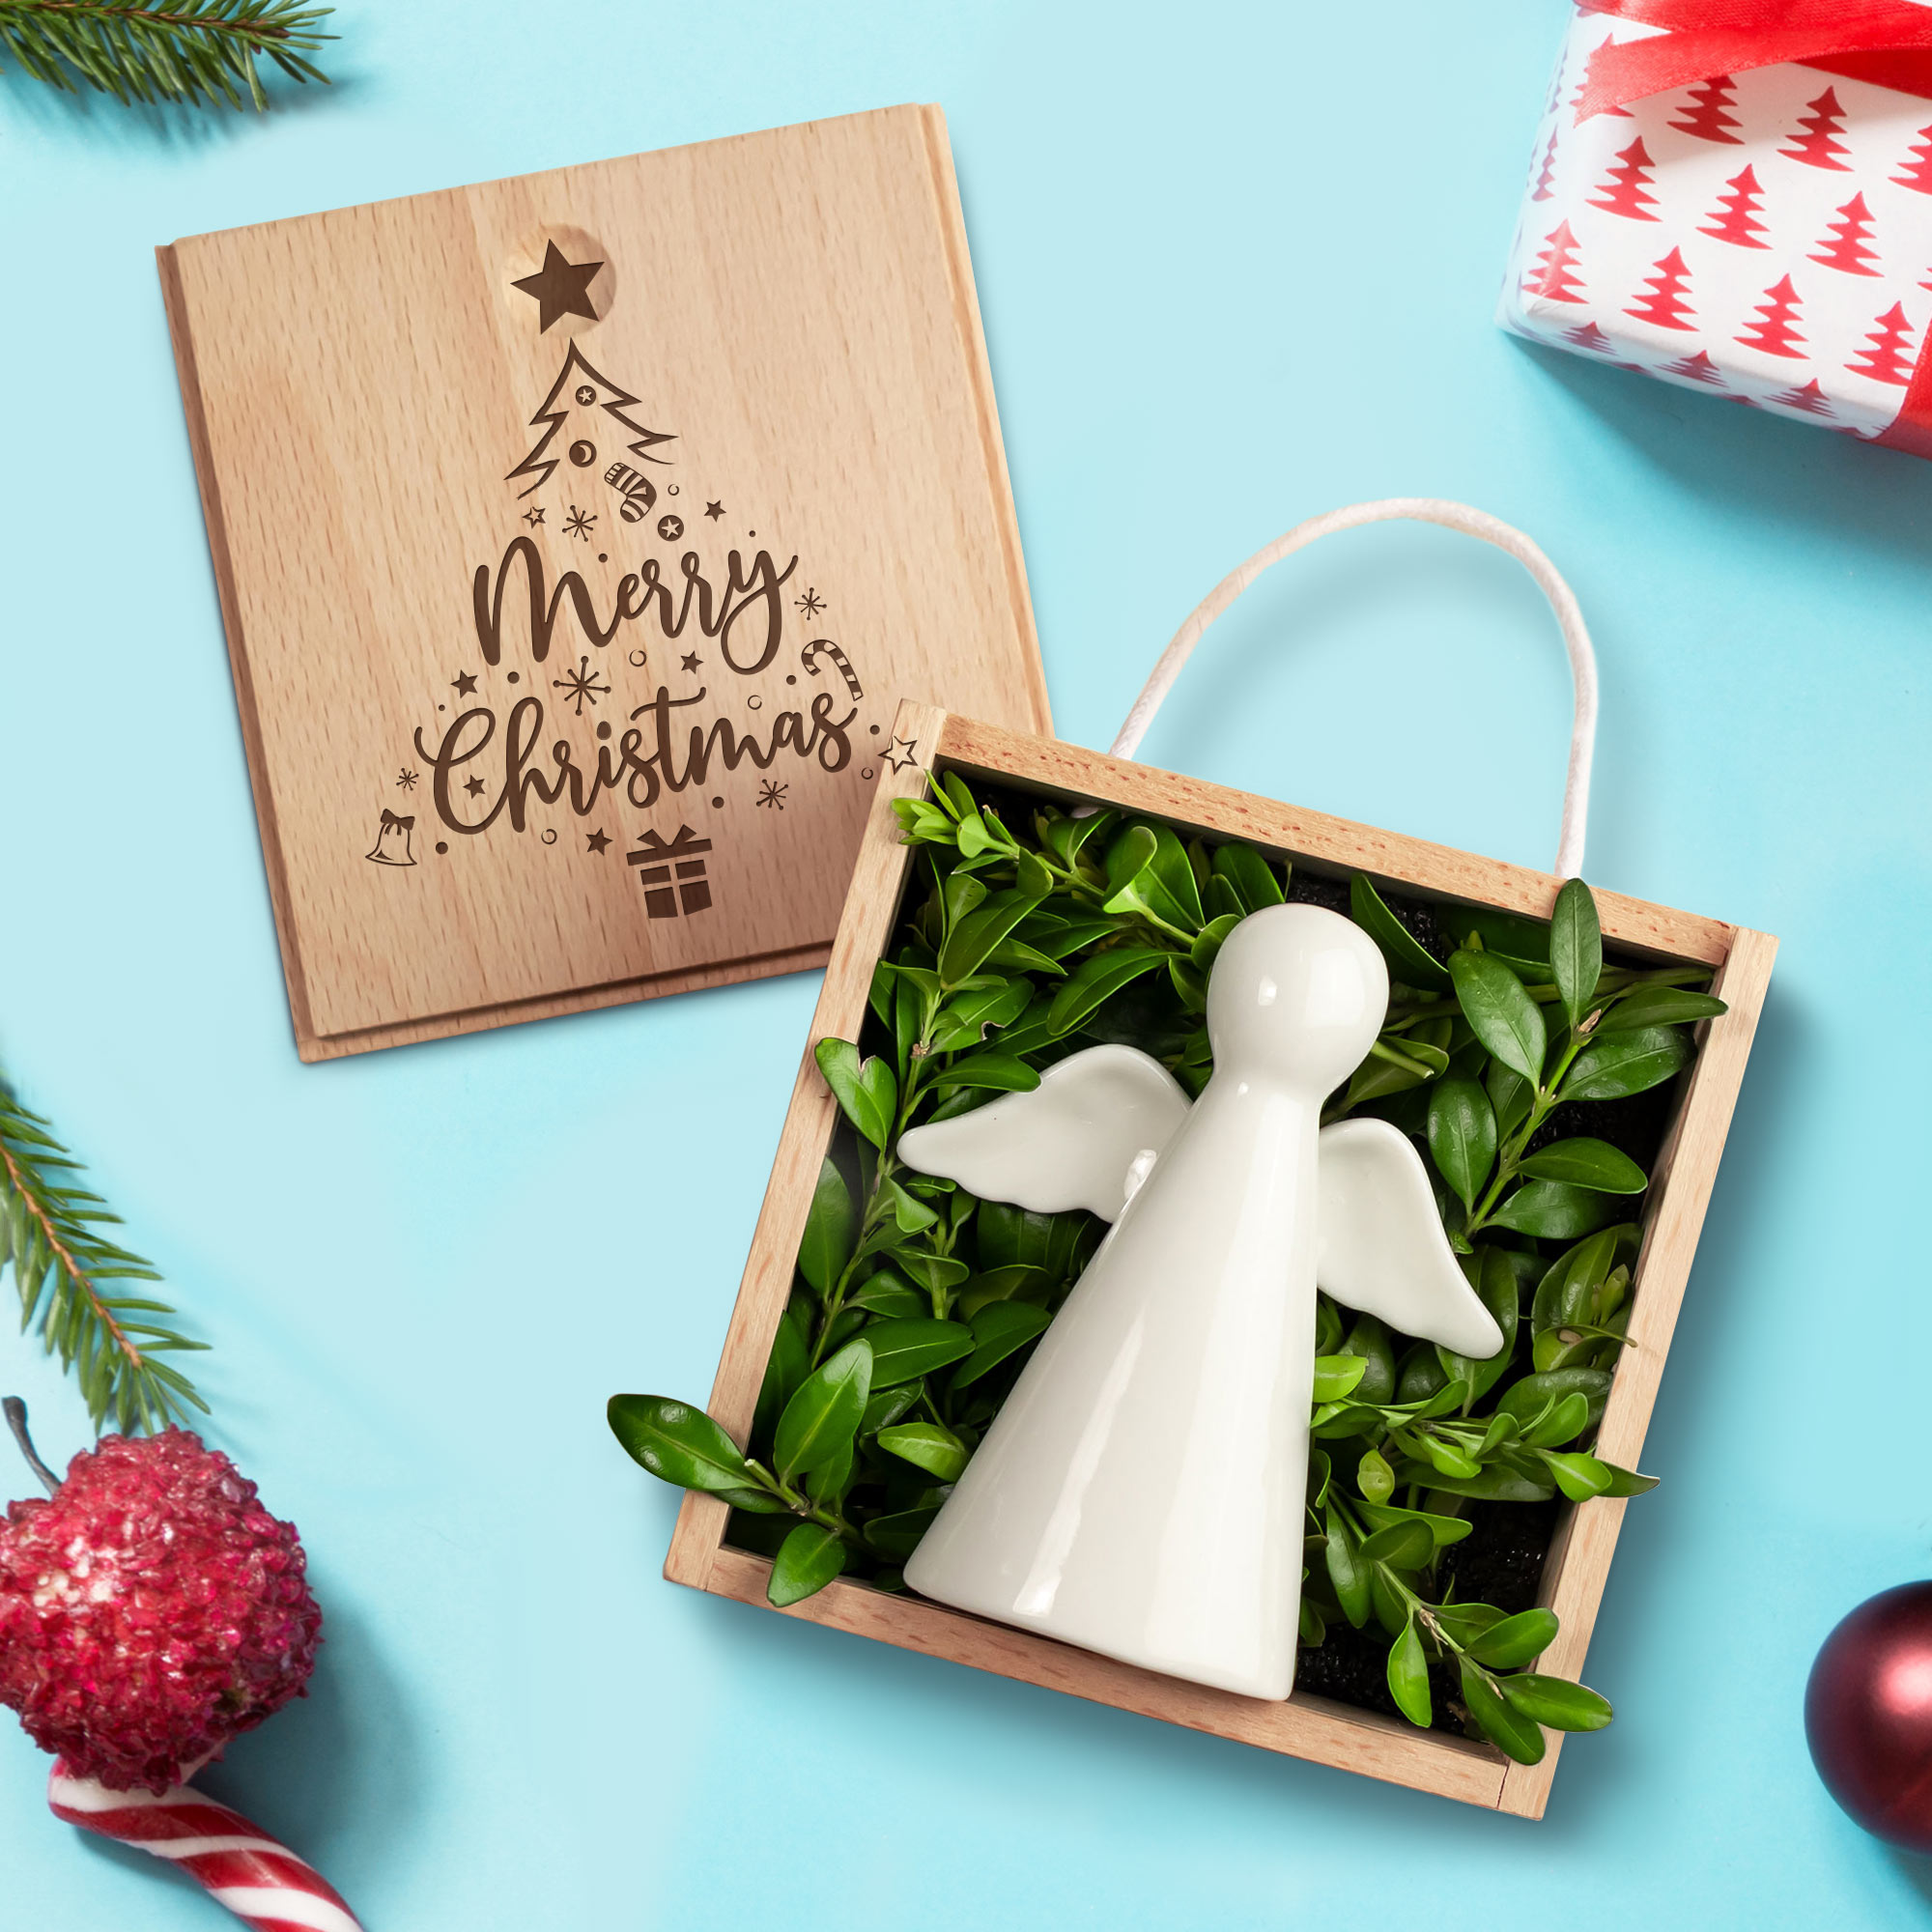 Engel in Holzbox - Weihnachtsbaum - Merry Christmas - Standard